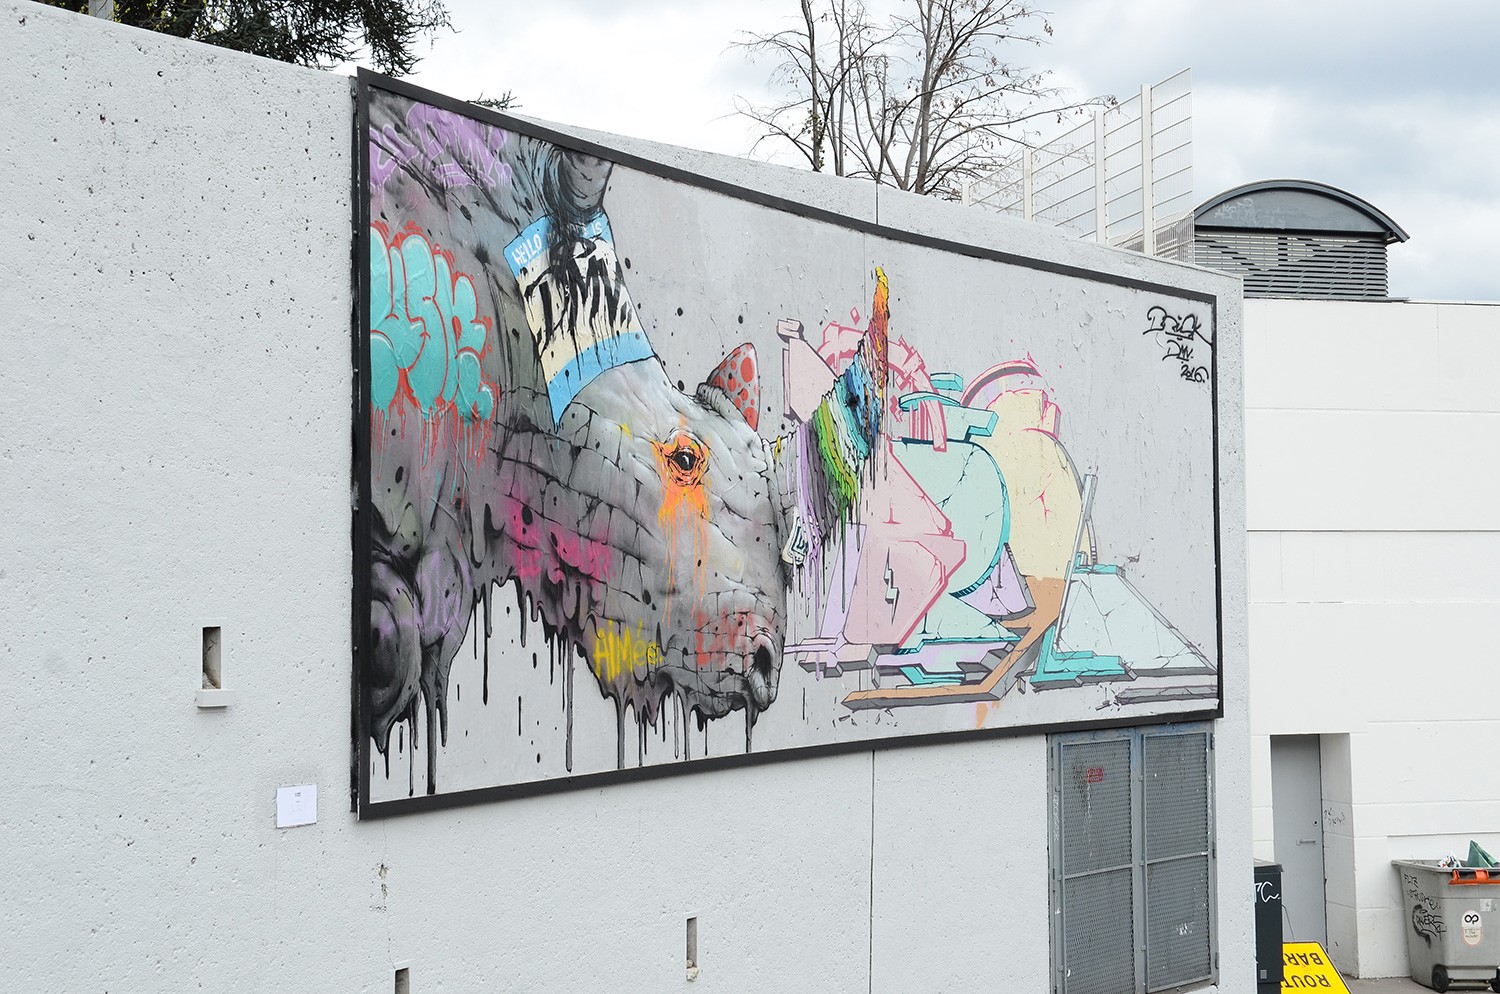 Brusk-DMV-Le-Mur-De-Saint-Etienne-Graffiti-Da-Mental-Vaporz-33